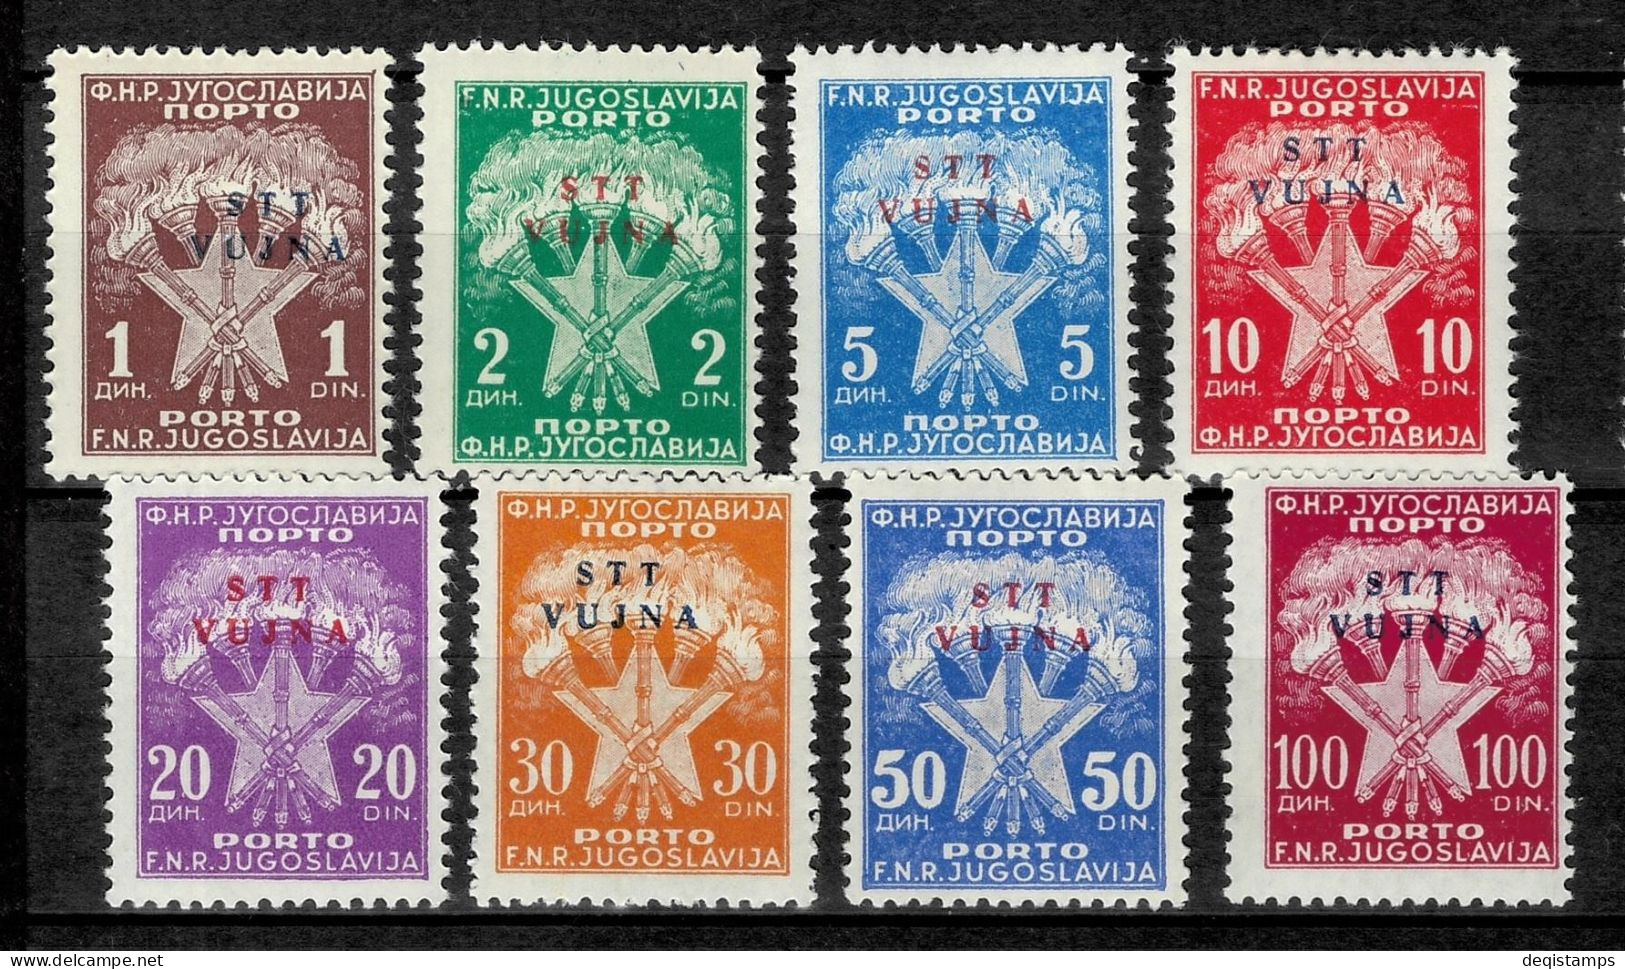 Trieste B STT - Vujna Year 1952  Porto Complete Set  MNH(**) - Yugoslavian Occ.: Trieste